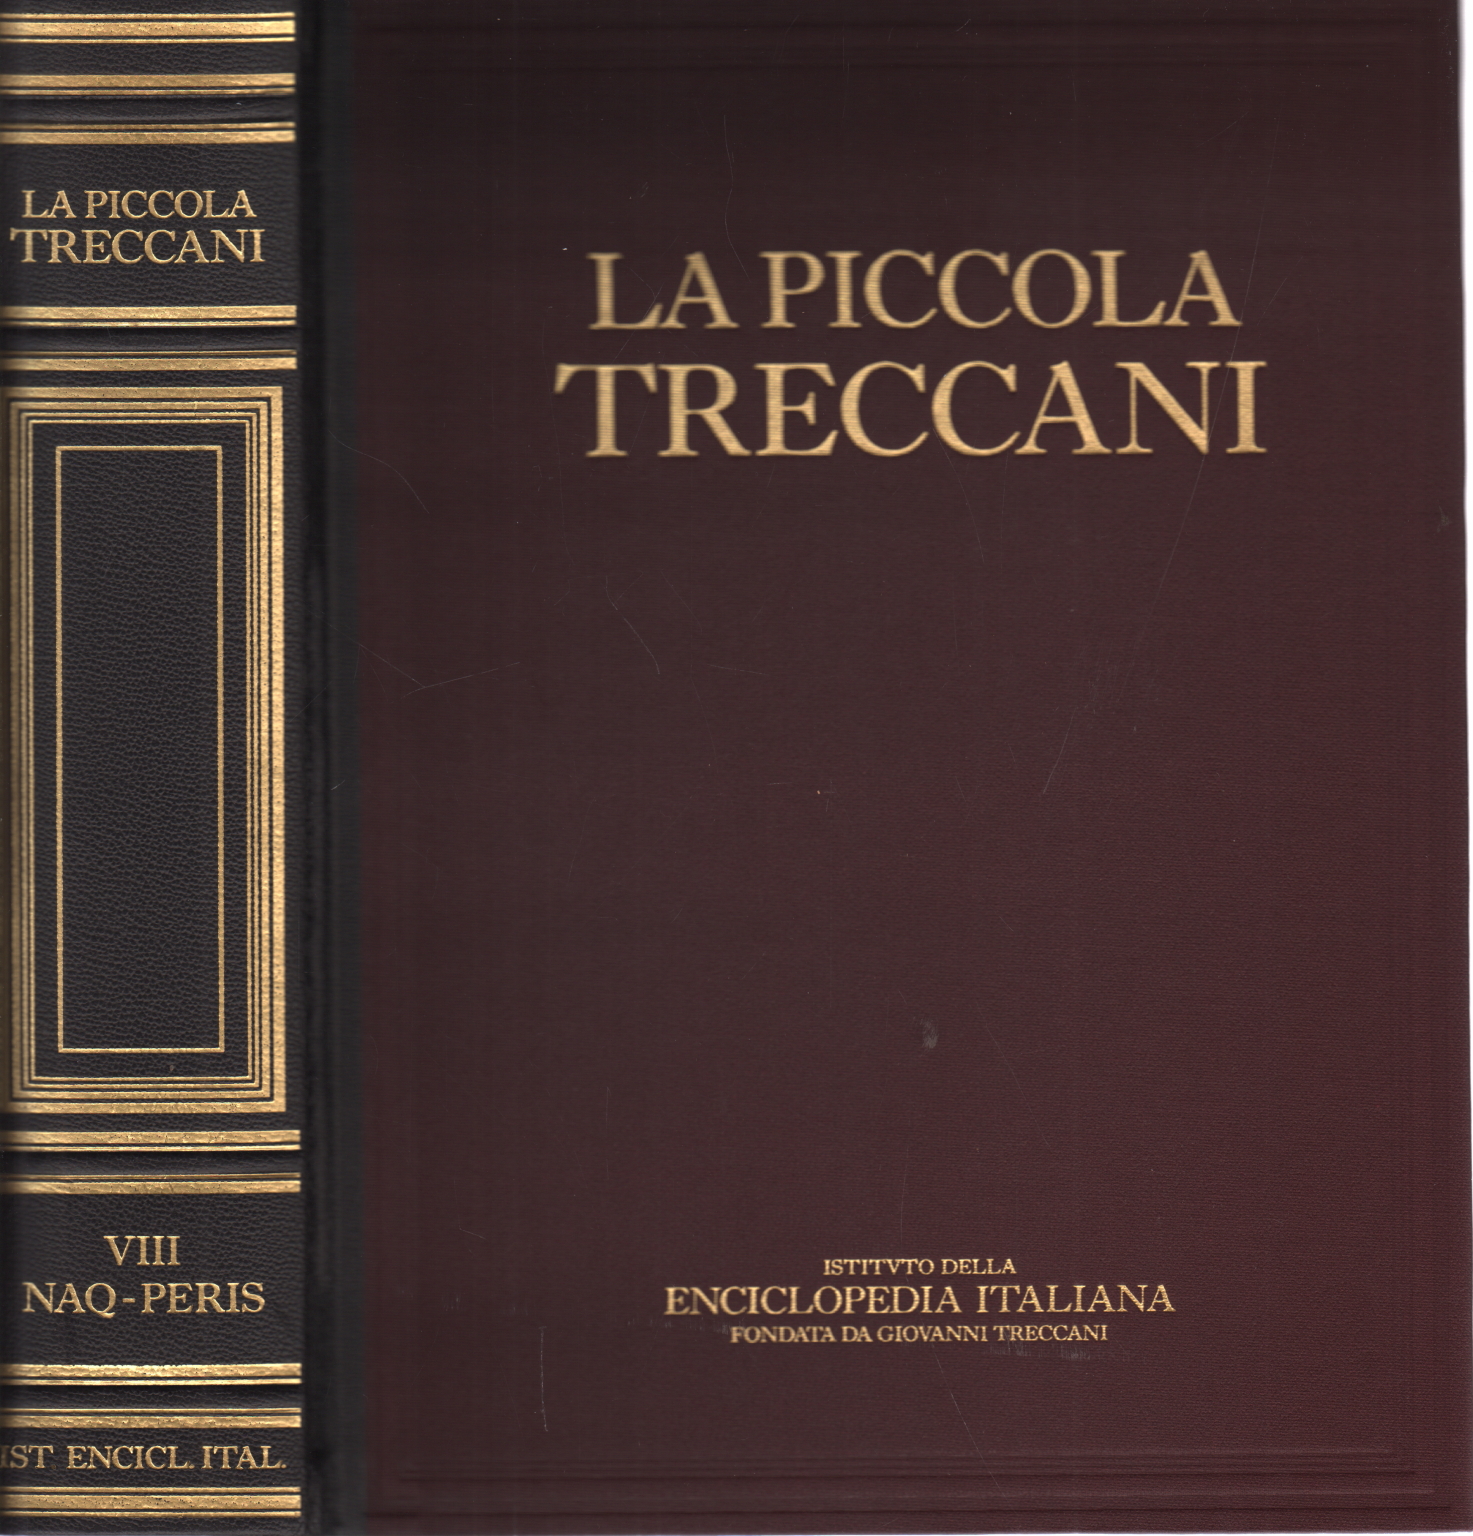 The Little Treccani VIII Naq-Peris